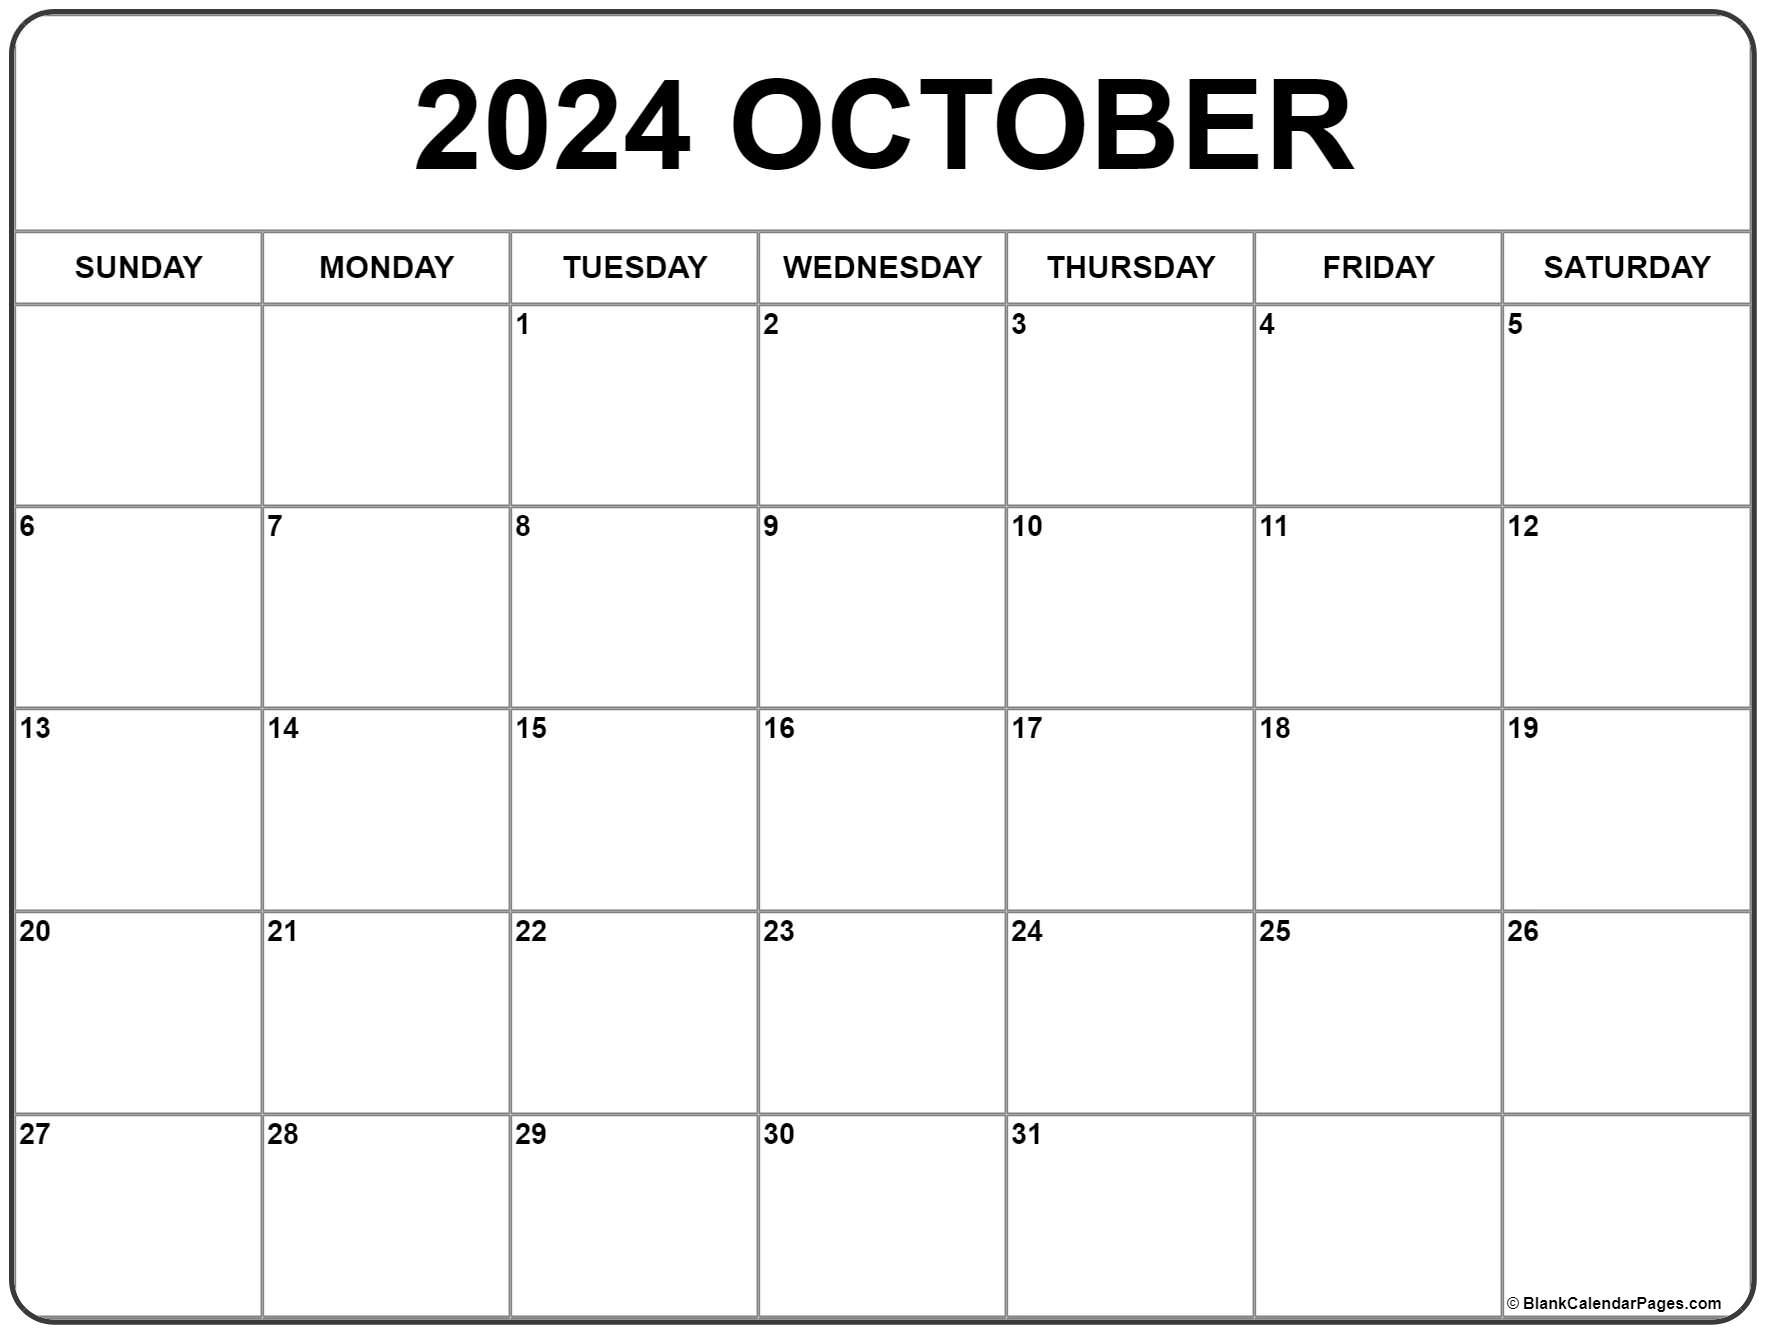 October 2024 Calendar | Free Printable Calendar for Printable October Calendar 2024